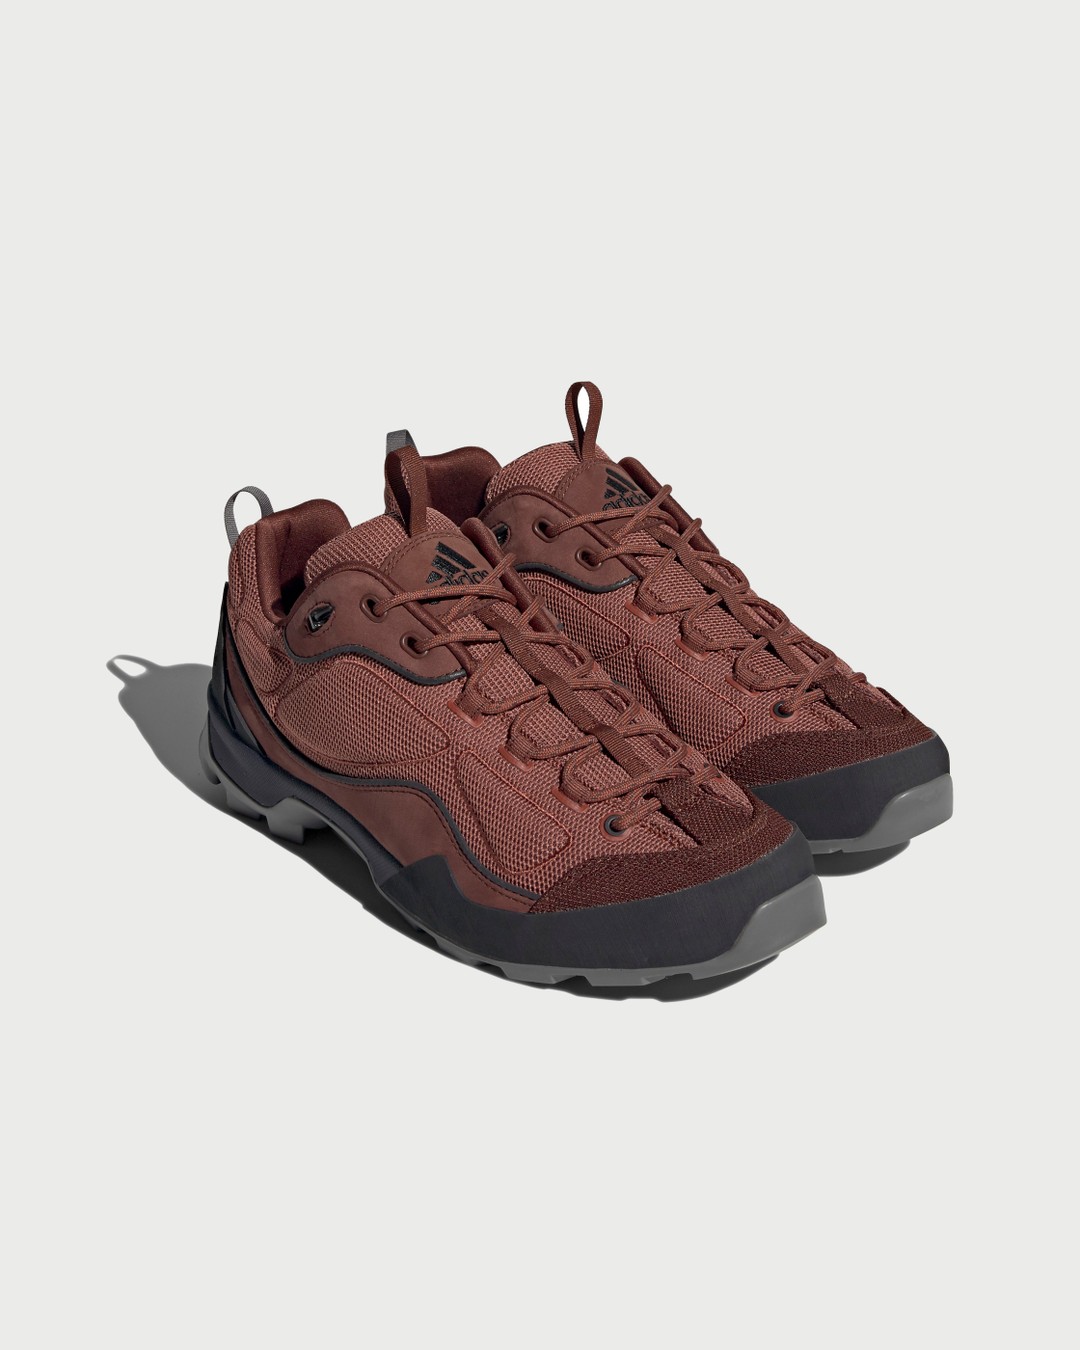 Adidas – Sahalex Brown - Low Top Sneakers - Brown - Image 2